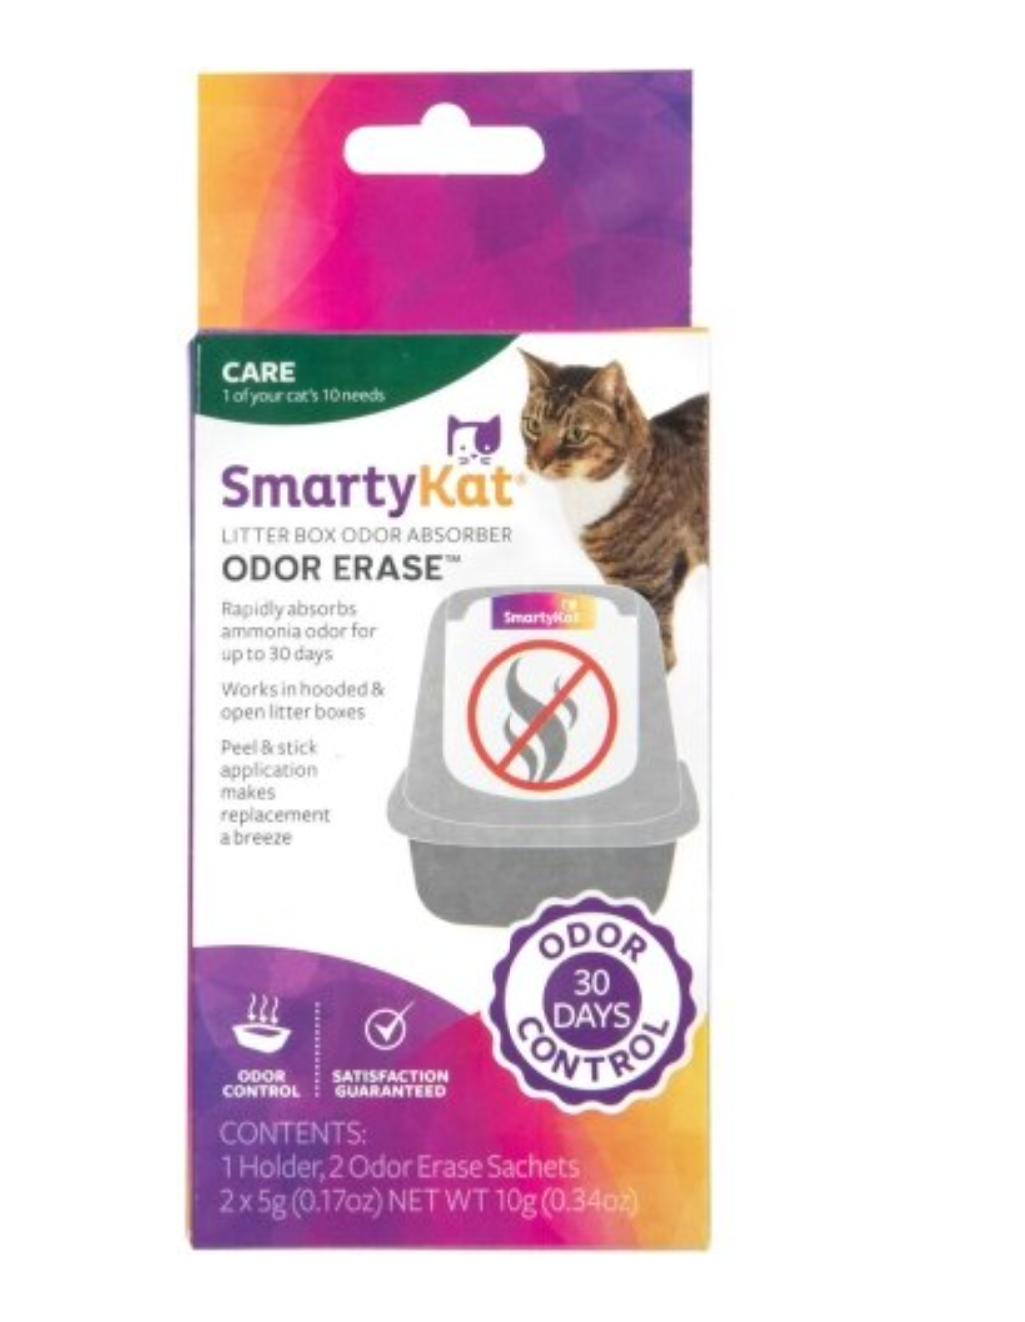 Smarty Kat Odor Erase Litter Box Deodorizer